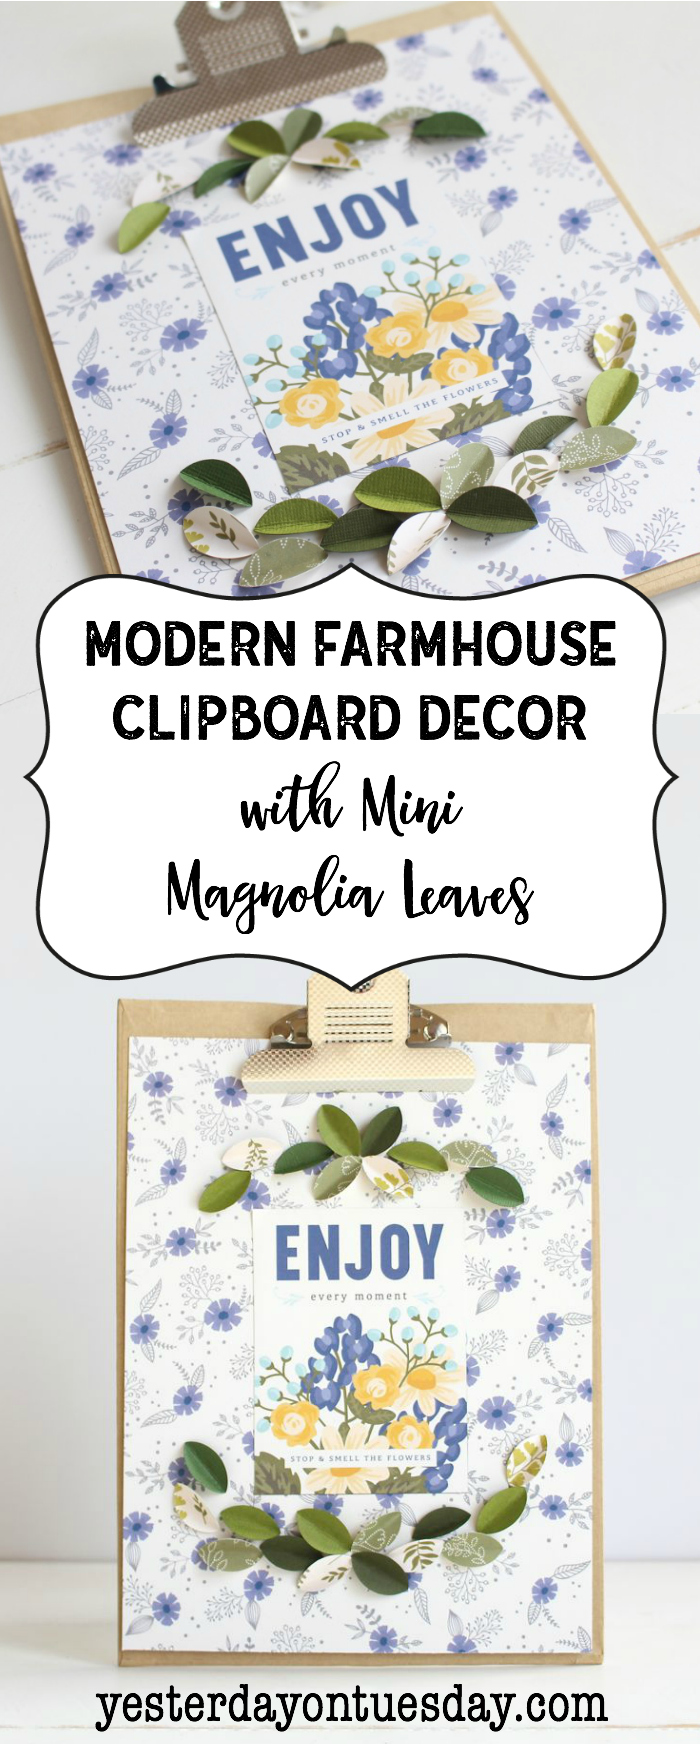 Modern Farmhouse Clipboard Decor: How to make darling fixer upper style art including mini magnolia leaves!